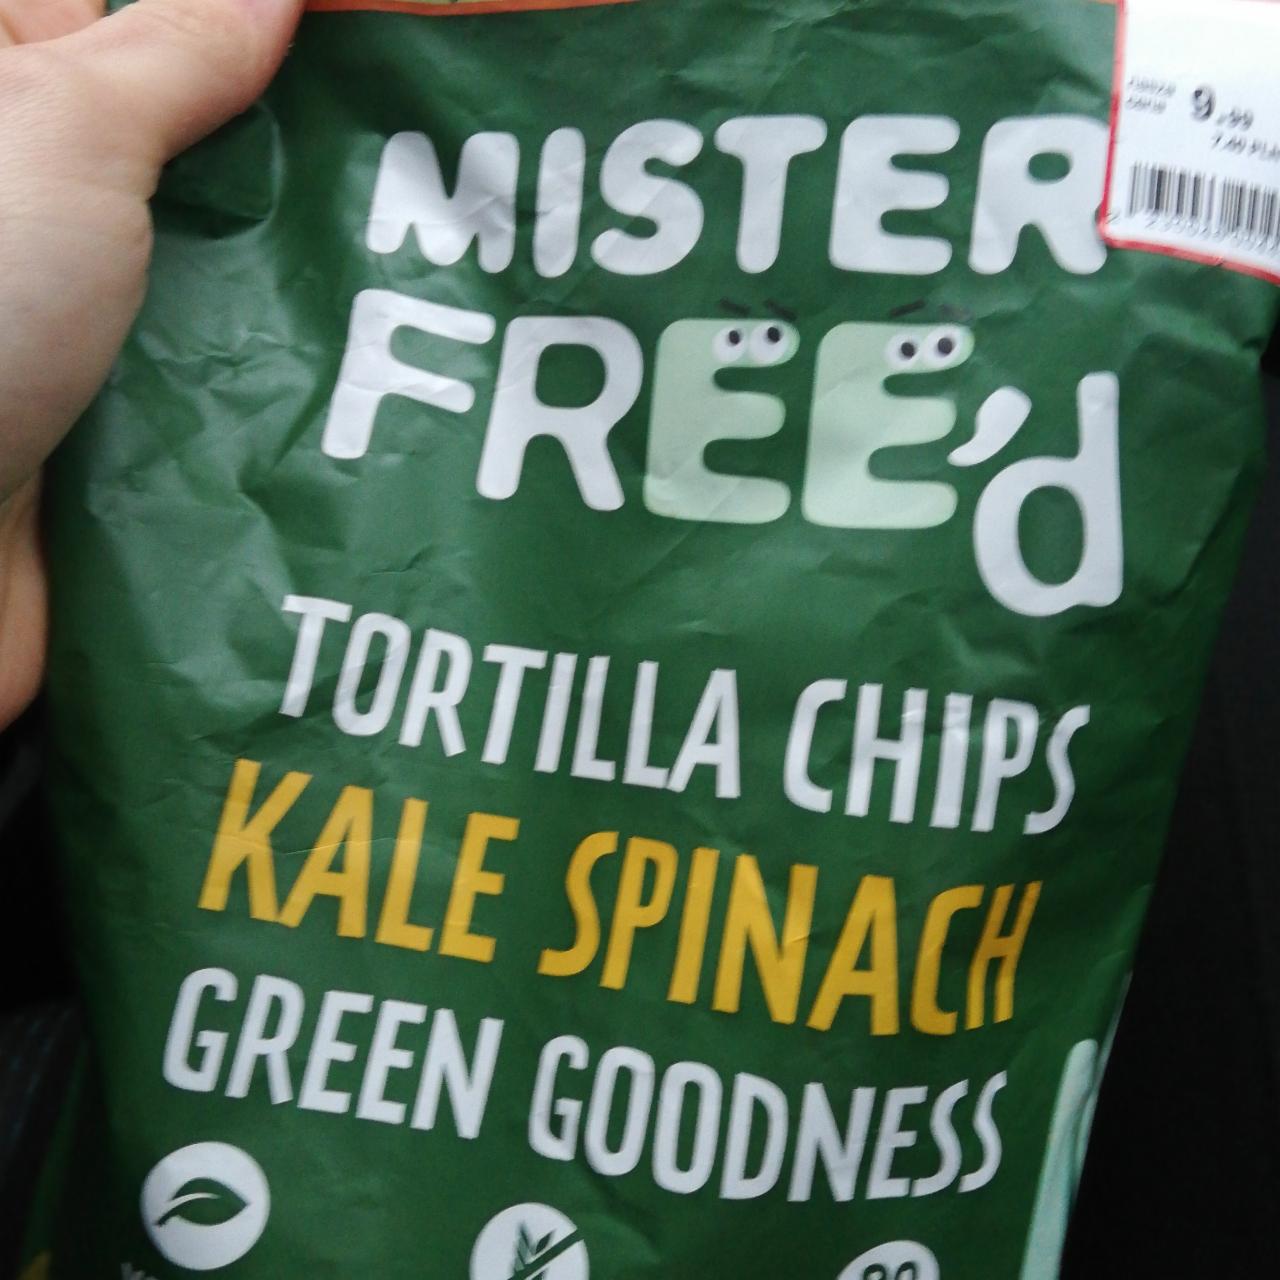 Zdjęcia - Tortilla chips kale spinach Mister free'd